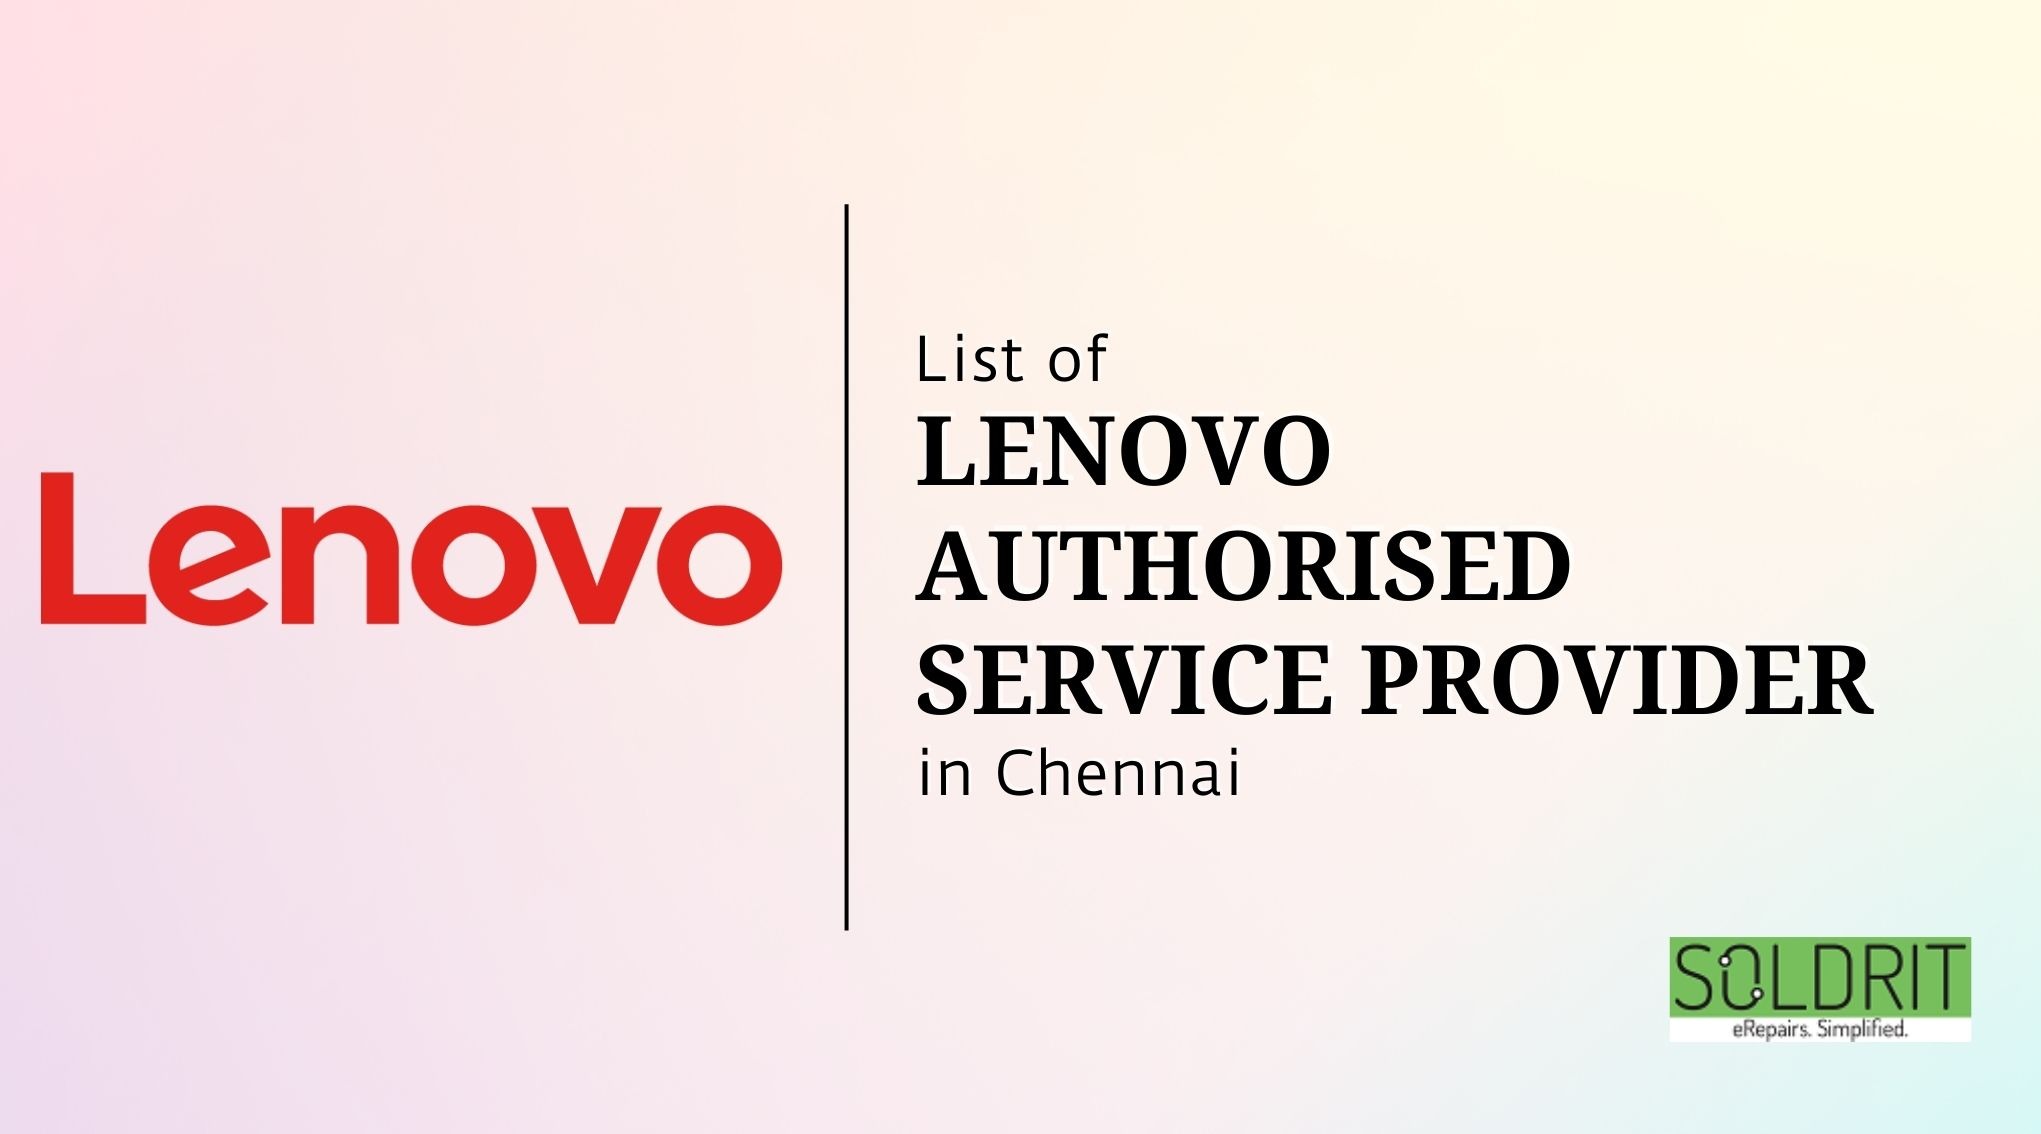 List of Lenovo Authorised Service Centers in Chennai